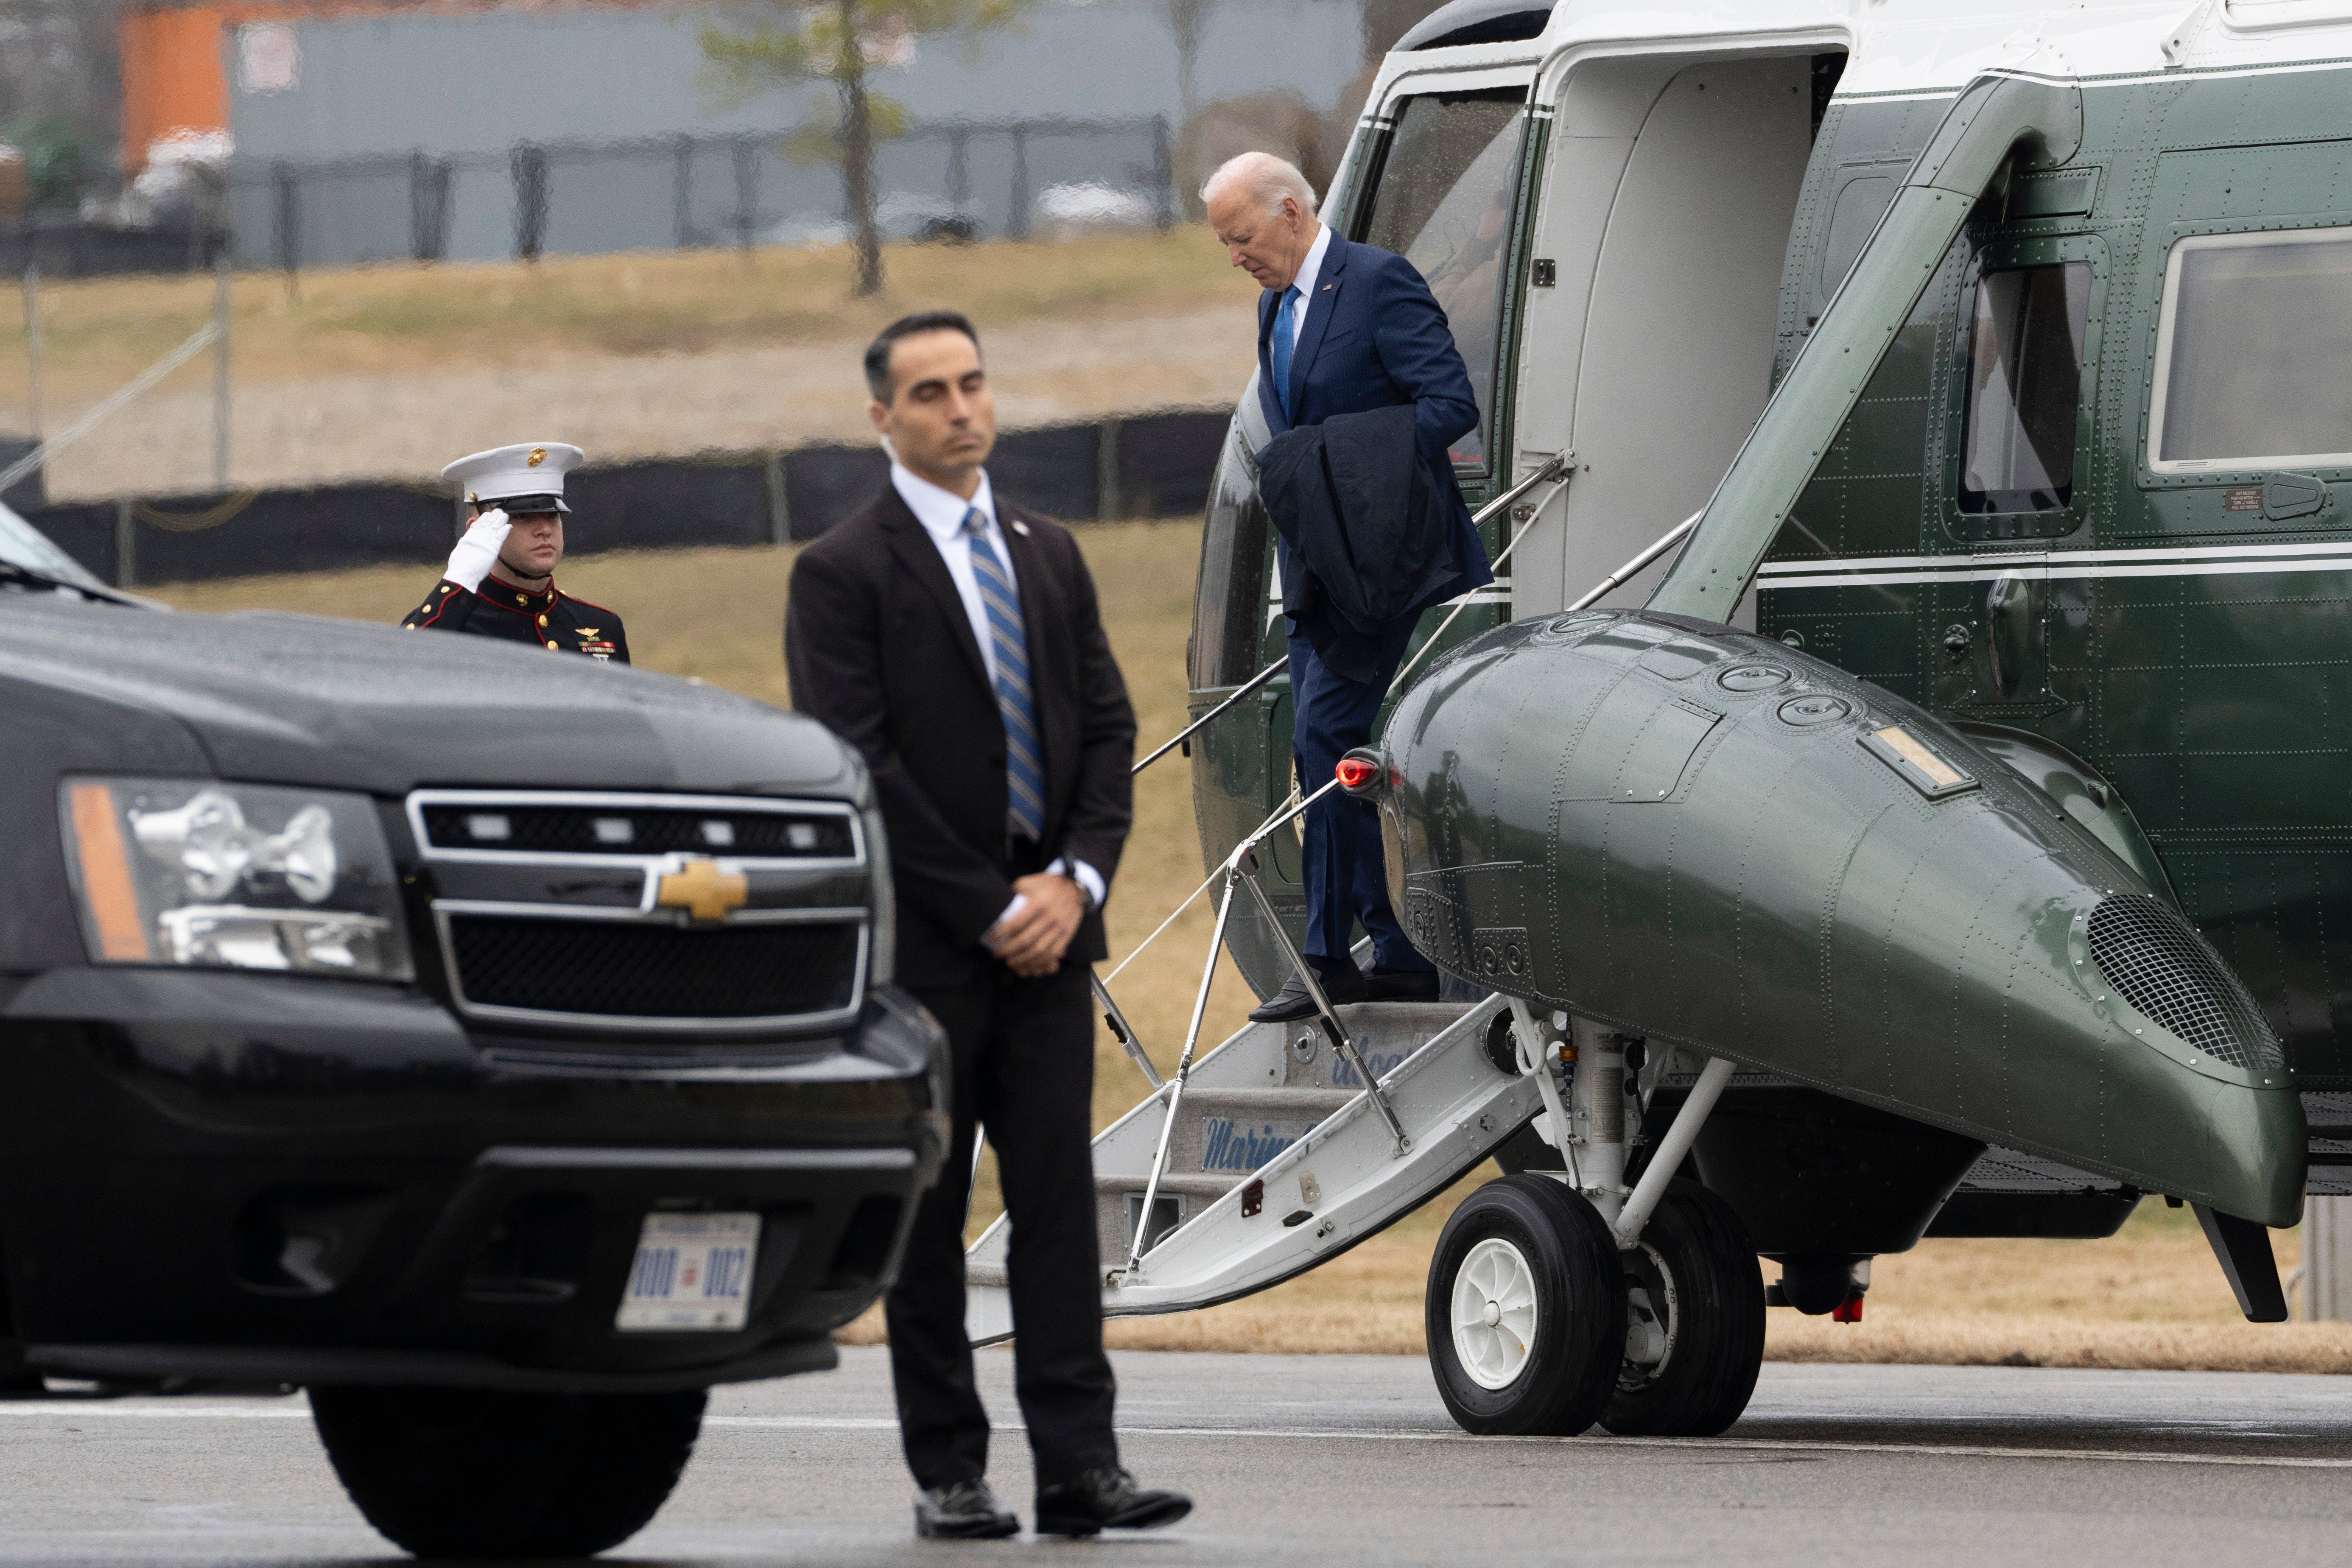 President Biden arrives at Walter Reed National Military Medical Center in Bethesda, Maryland